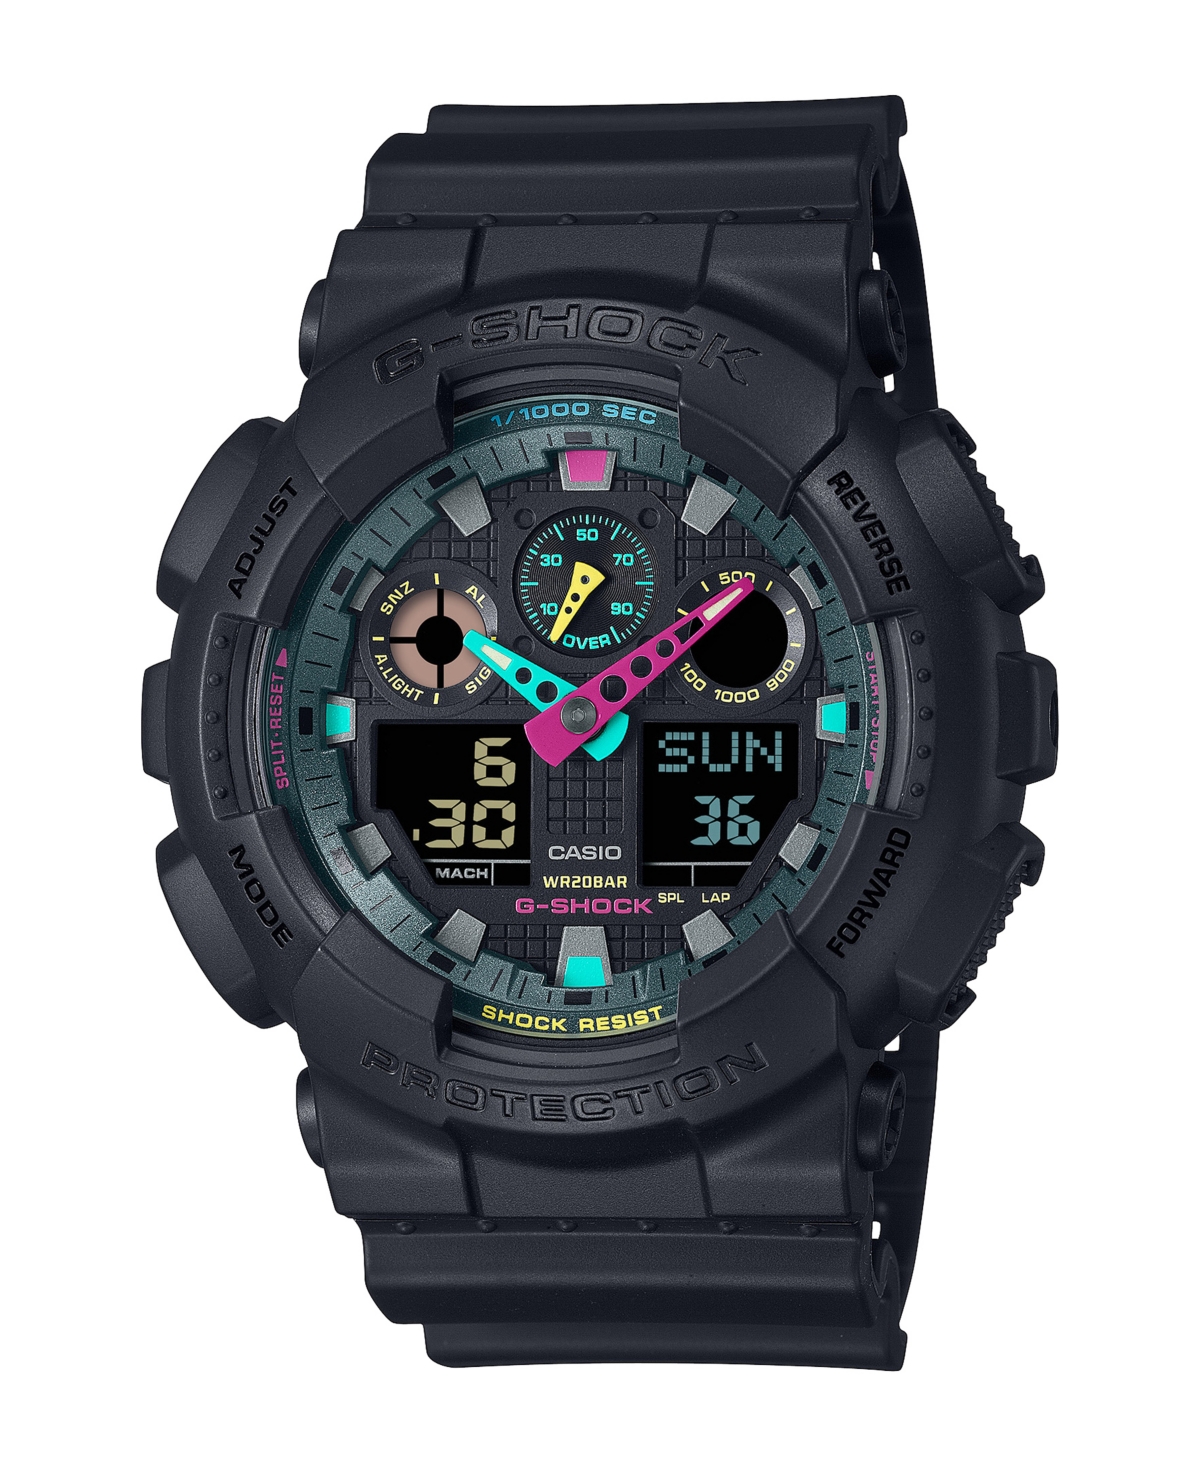 Mens Analog Digital Black Resin Watch, 55mm, GA100MF-1A - Black